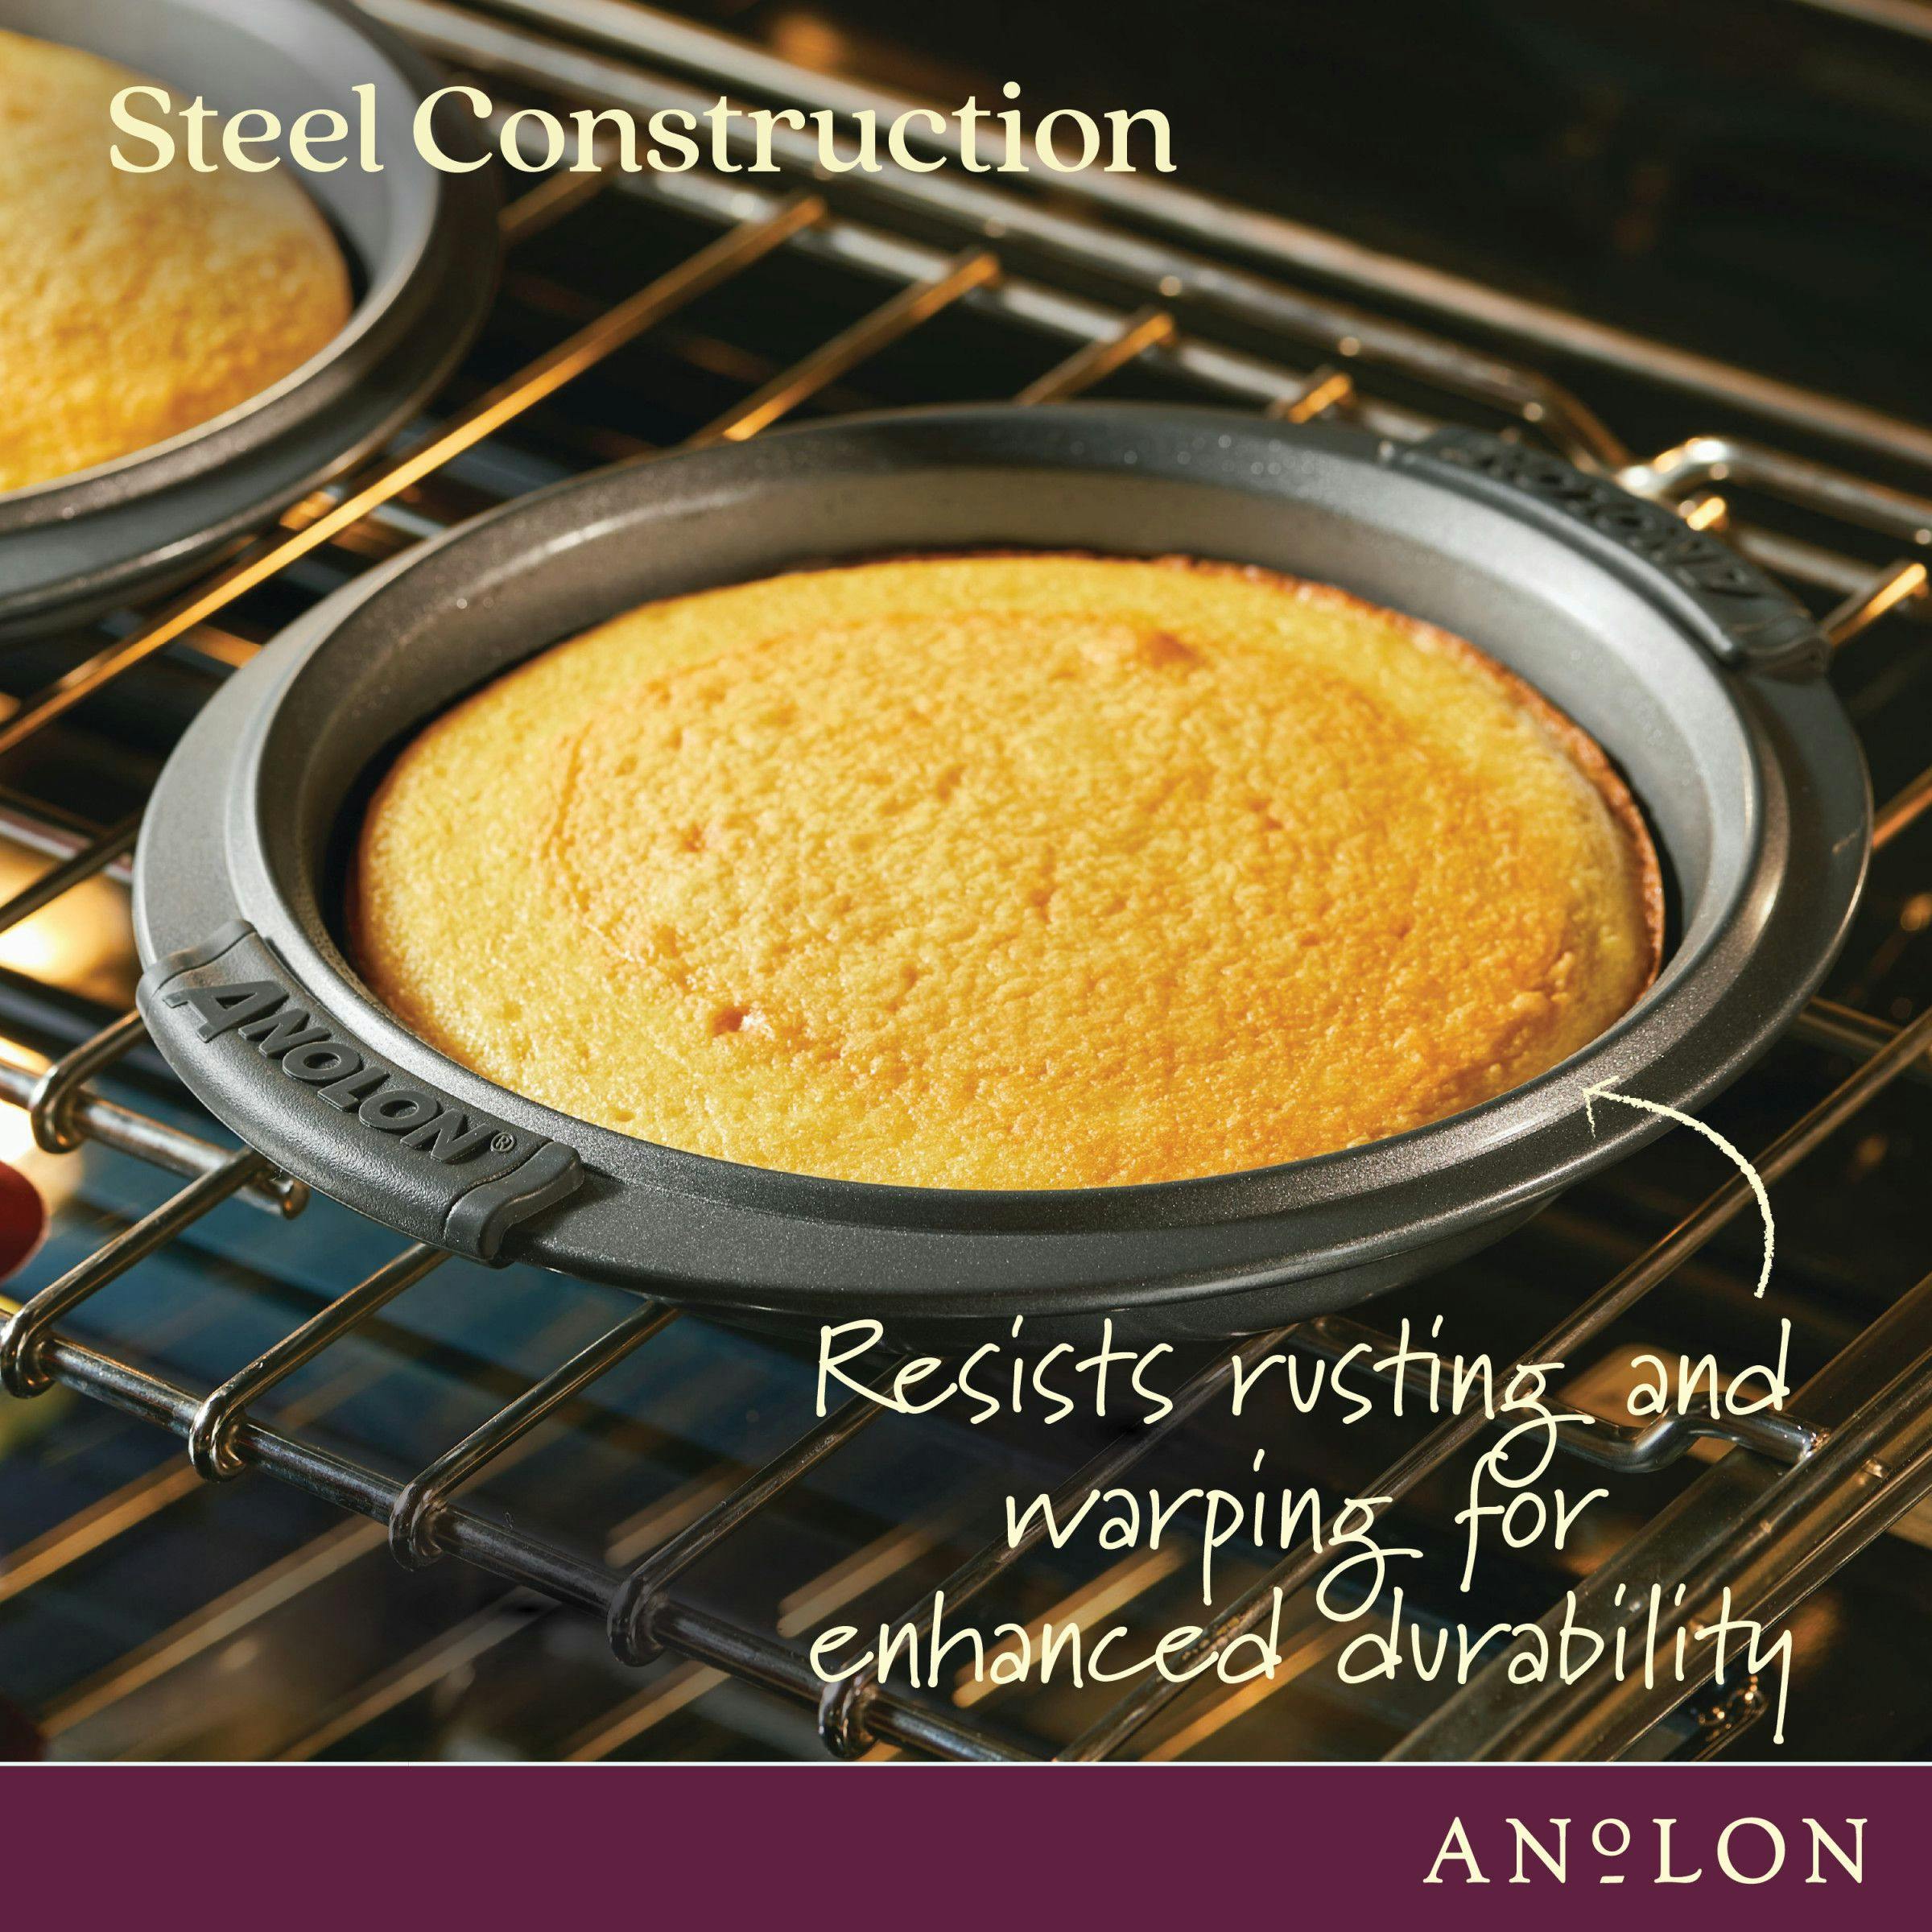 Anolon Advanced Bakeware Nonstick Square Springform Pan, 9-Inch x 9-Inch, Gray